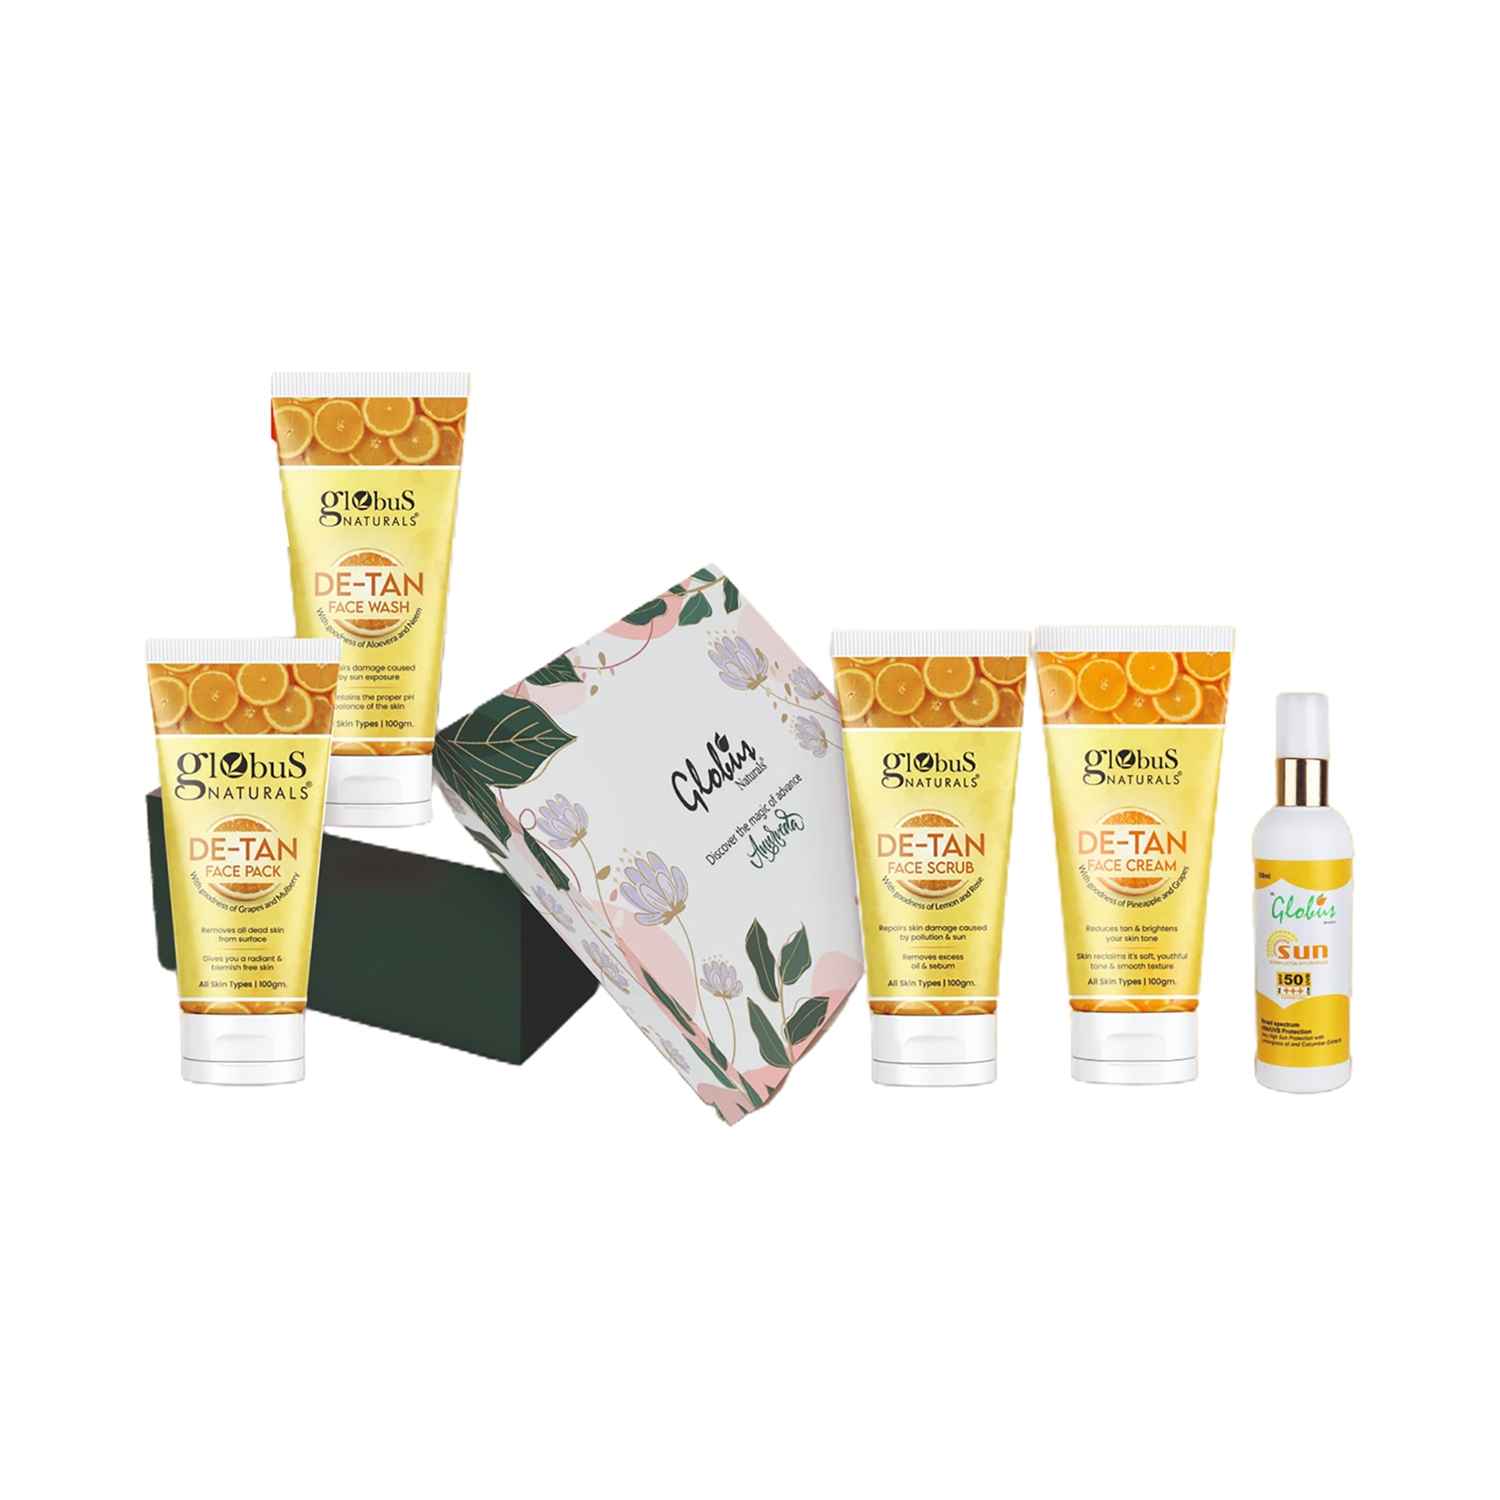 Globus Naturals | Globus Naturals De-Tan Face Wash, Face Pack Face Cream, Face Scrub & Sunscreen Lotion Gift Box (5pc)